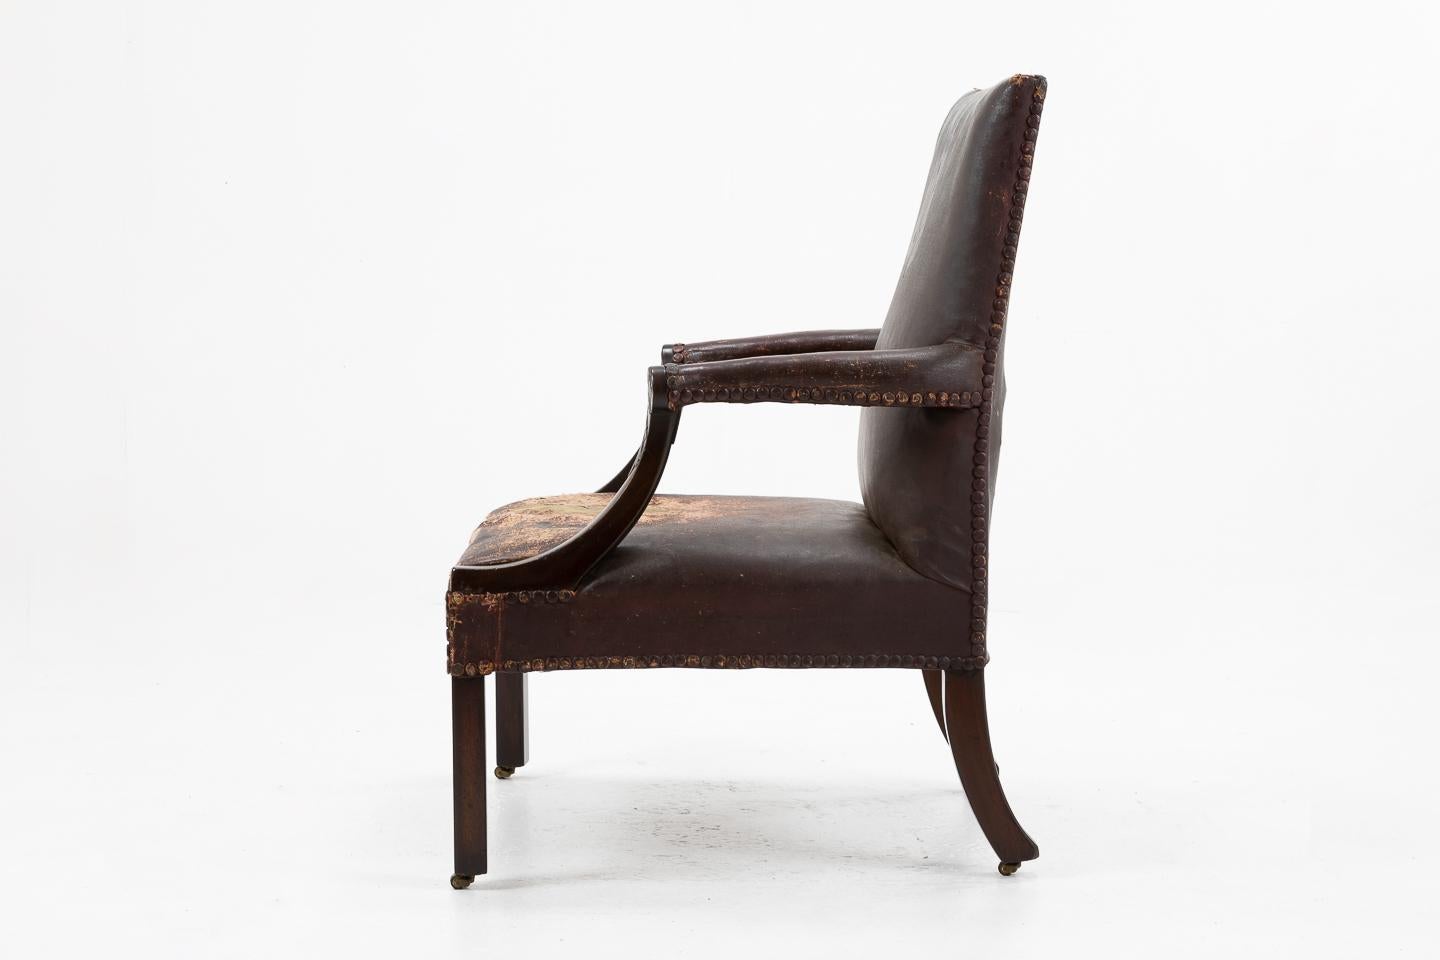 18th Century English Gainsborough Chair (Mahagoni)